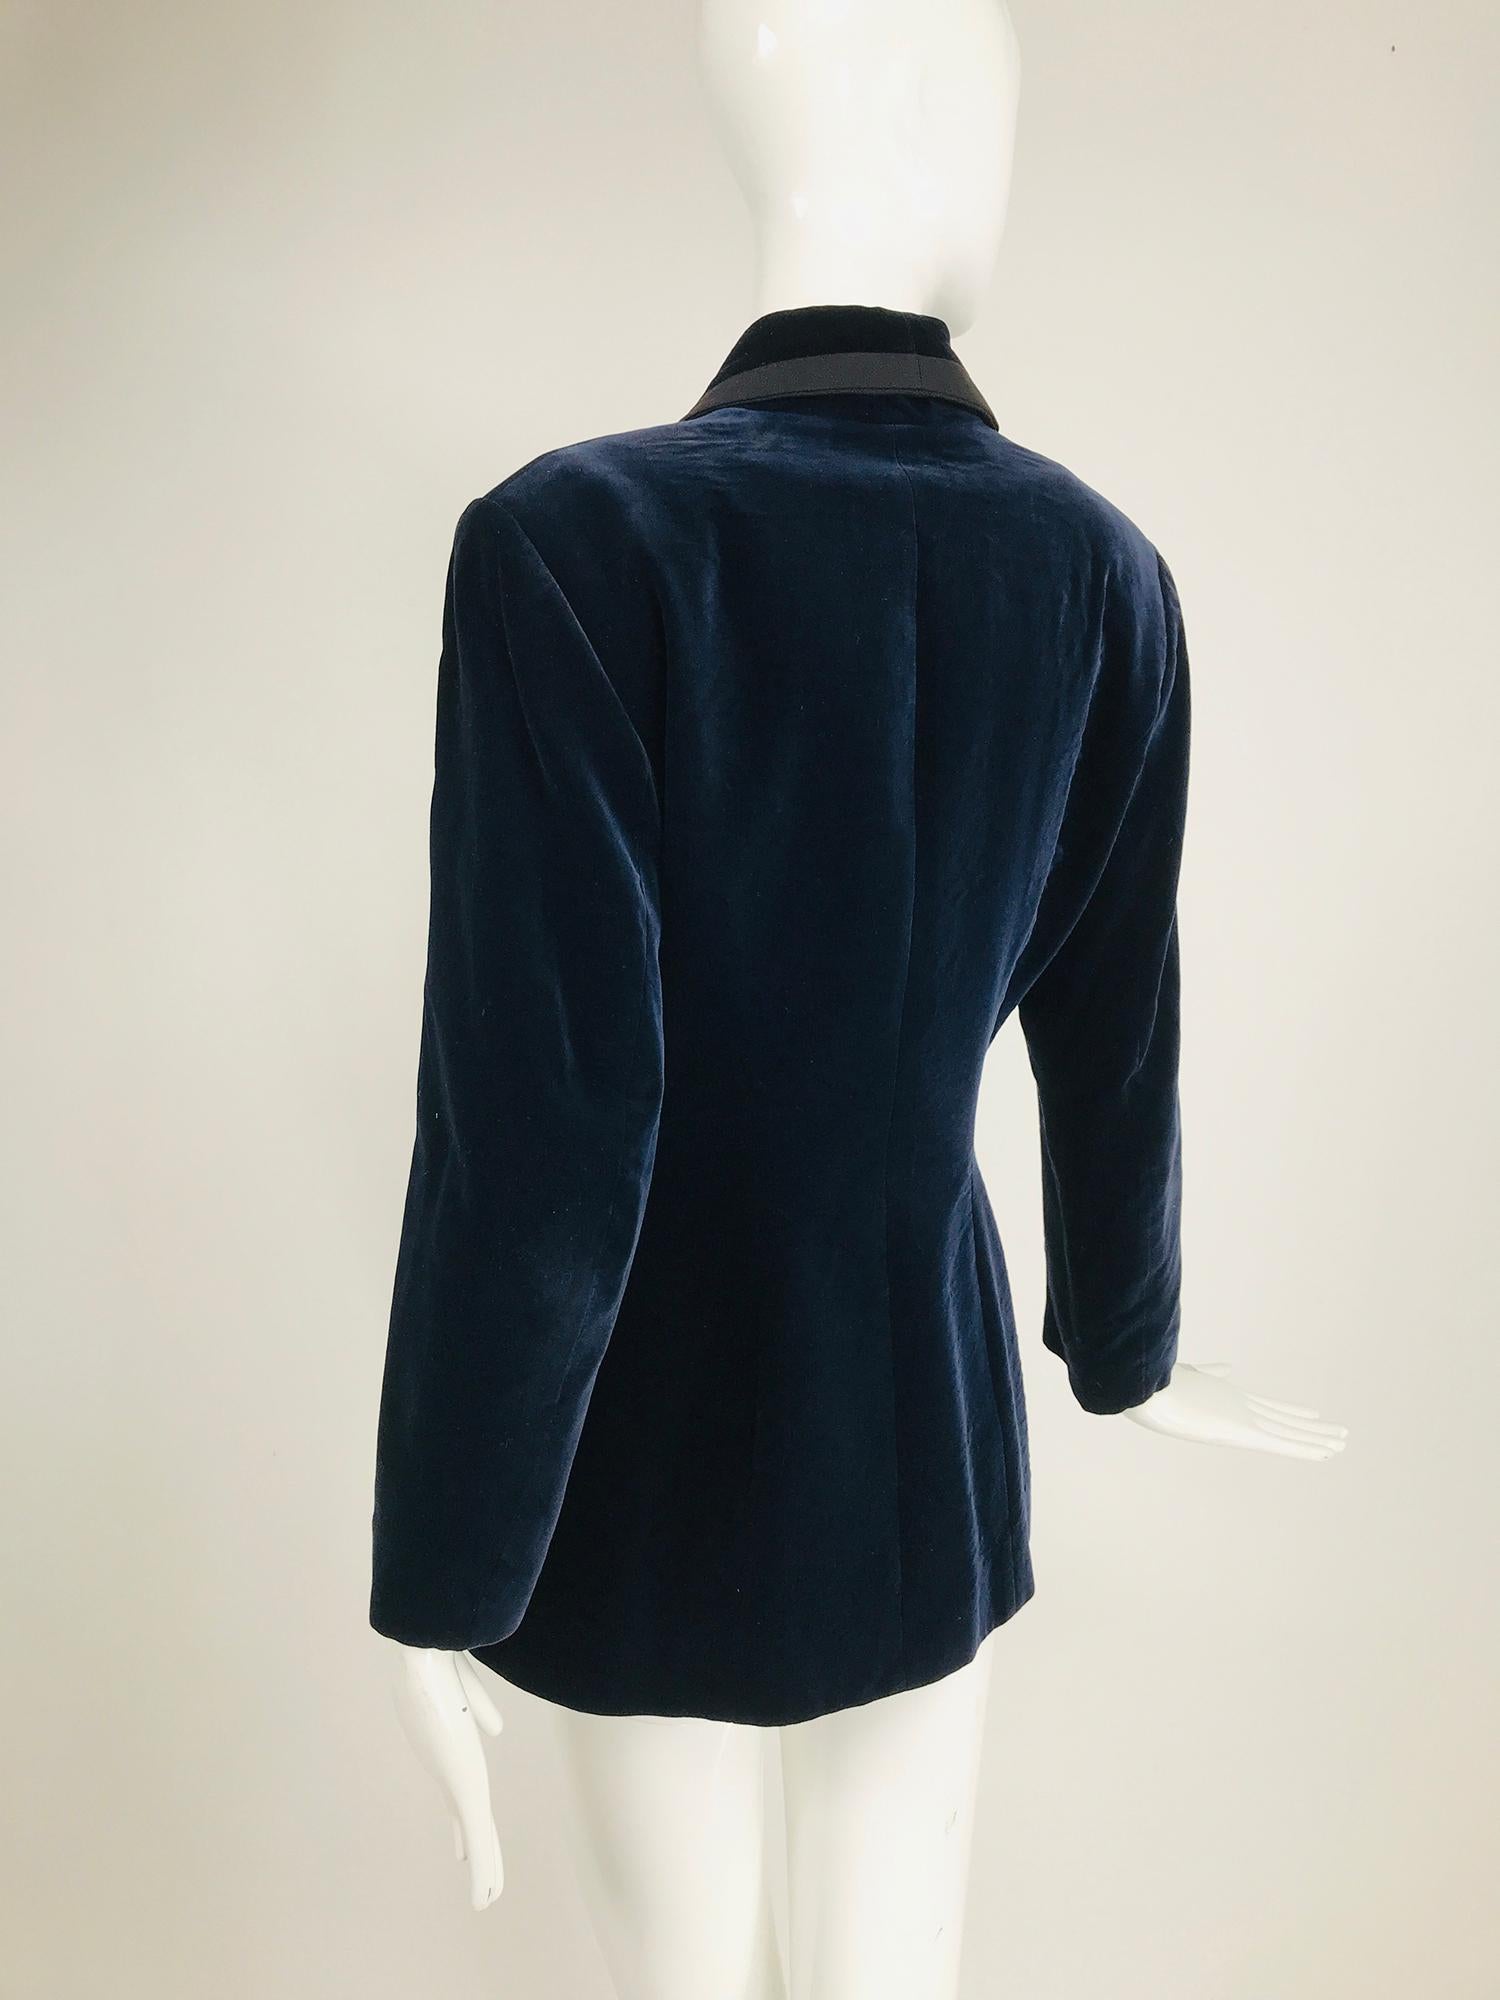 Azzedine Alaïa Blue Velvet Fitted Frock Style Jacket 1980s 2